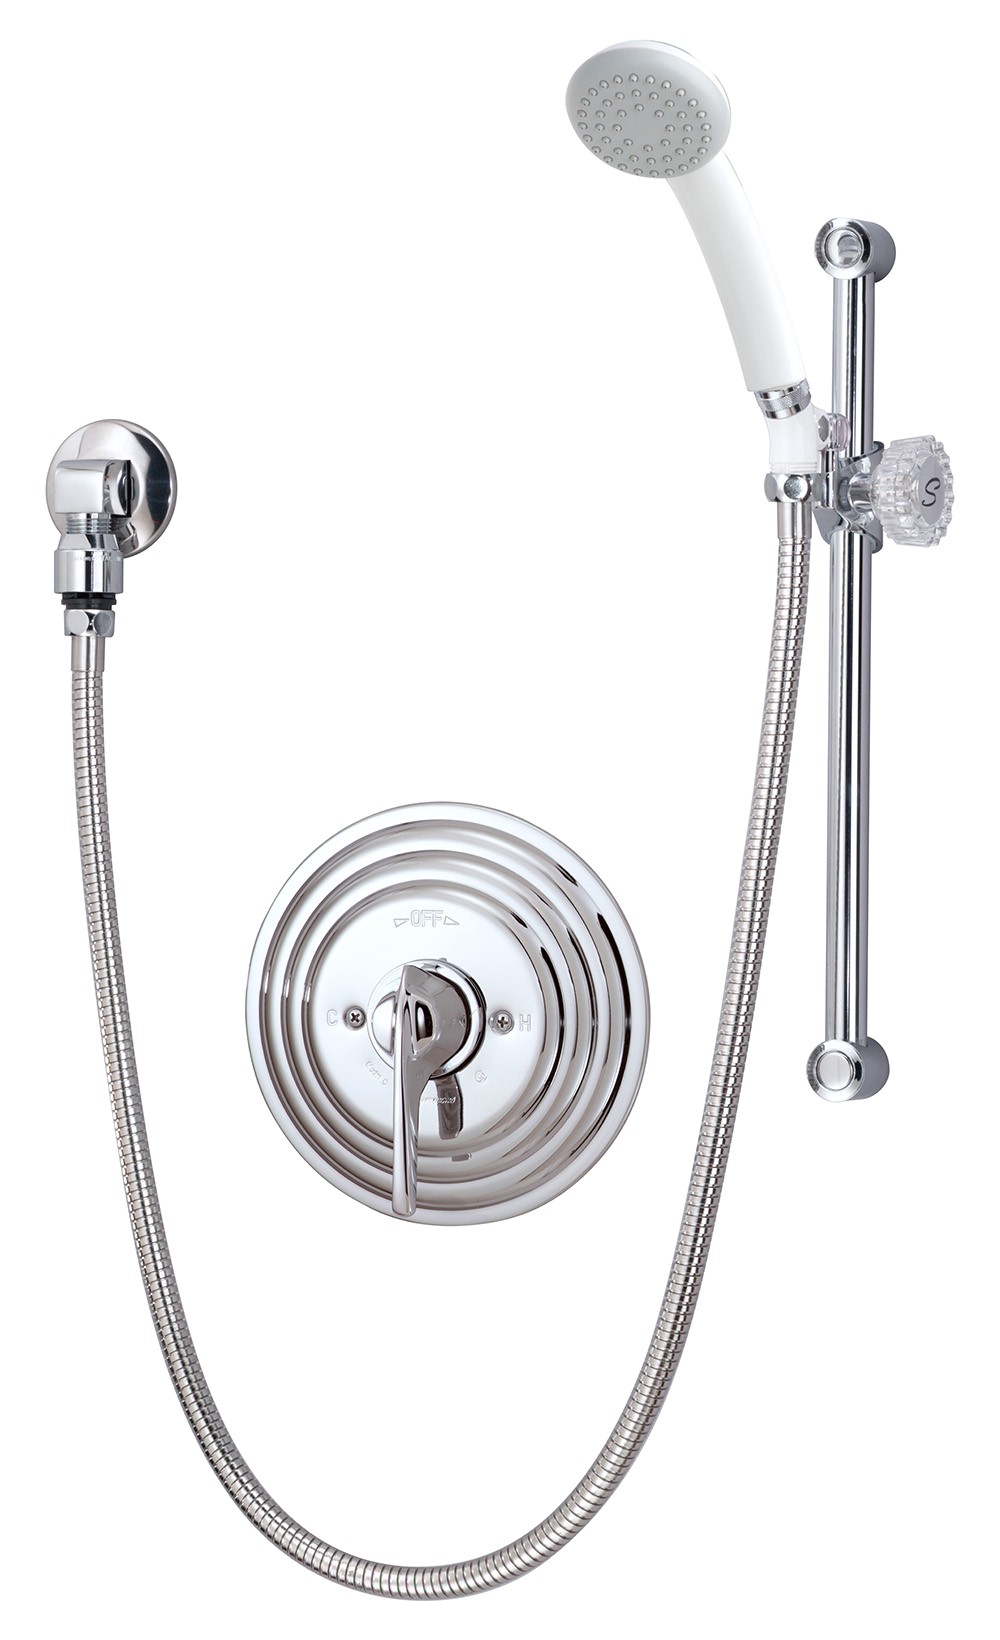 temptrola commercial hand shower system c 96 300 b30 v x symmons industries inc